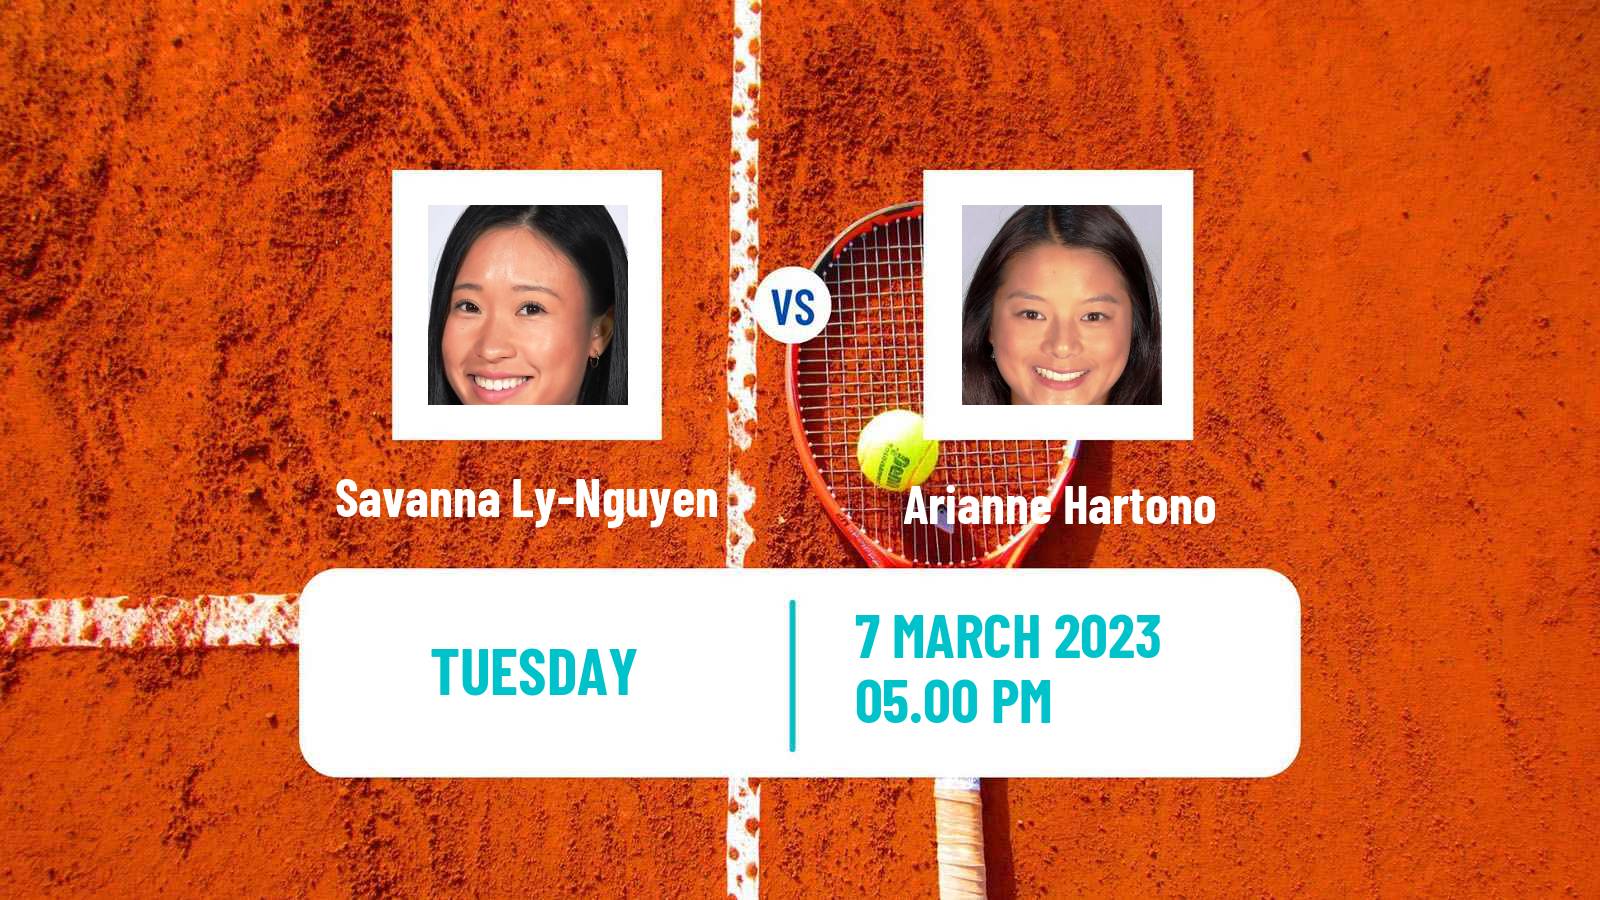 Tennis ITF Tournaments Savanna Ly-Nguyen - Arianne Hartono